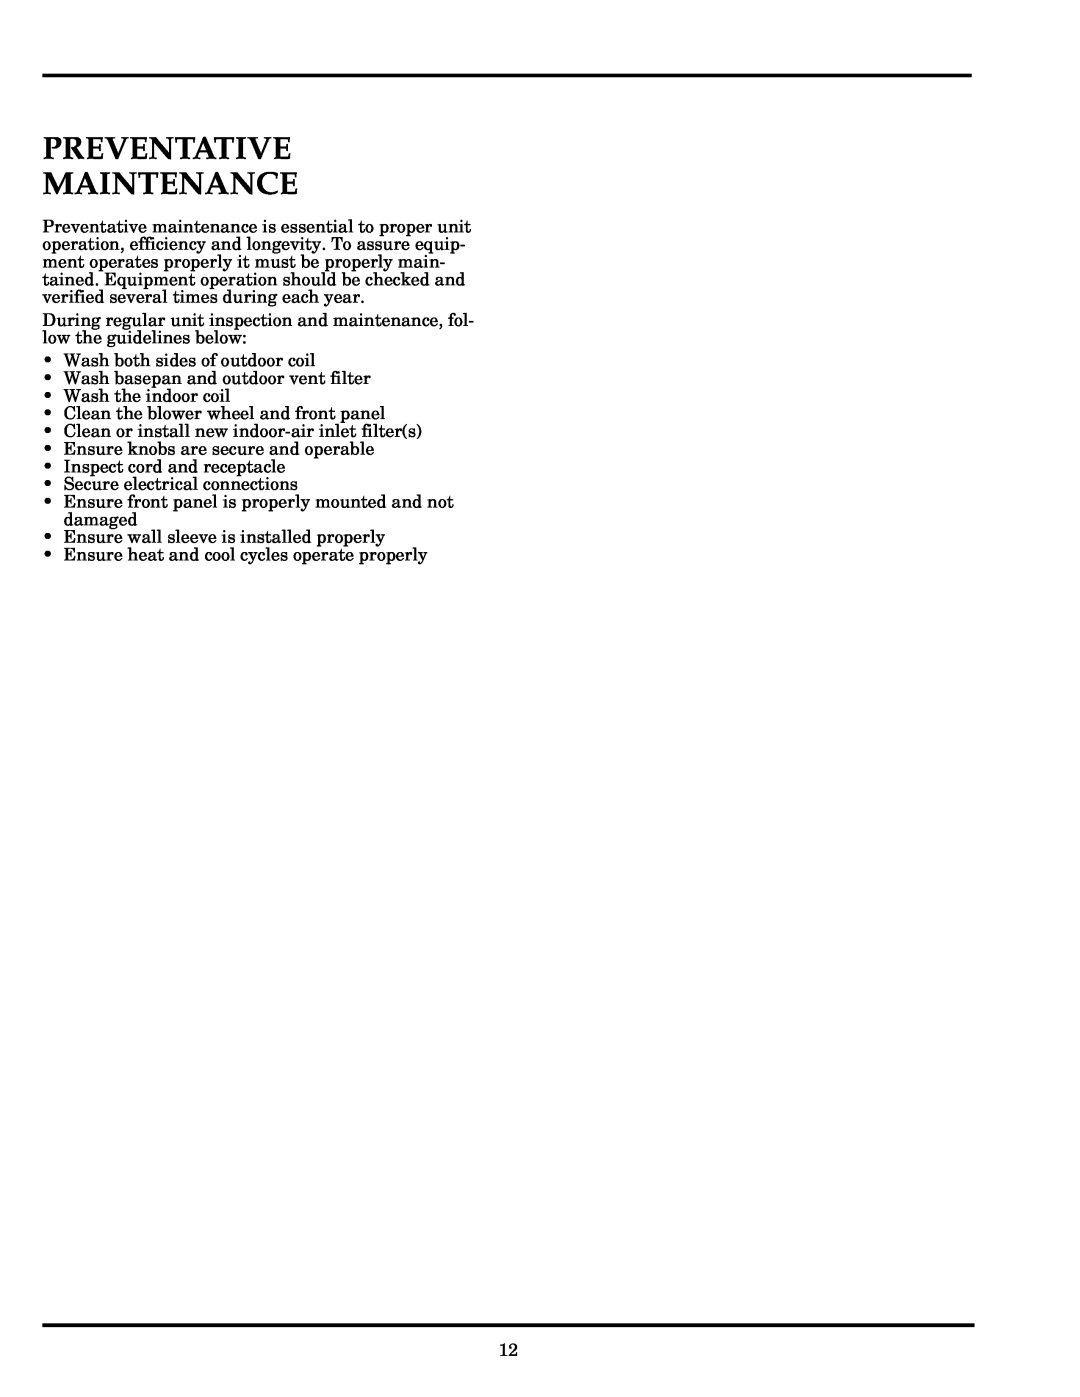 Carrier Access 52P owner manual Preventative Maintenance 